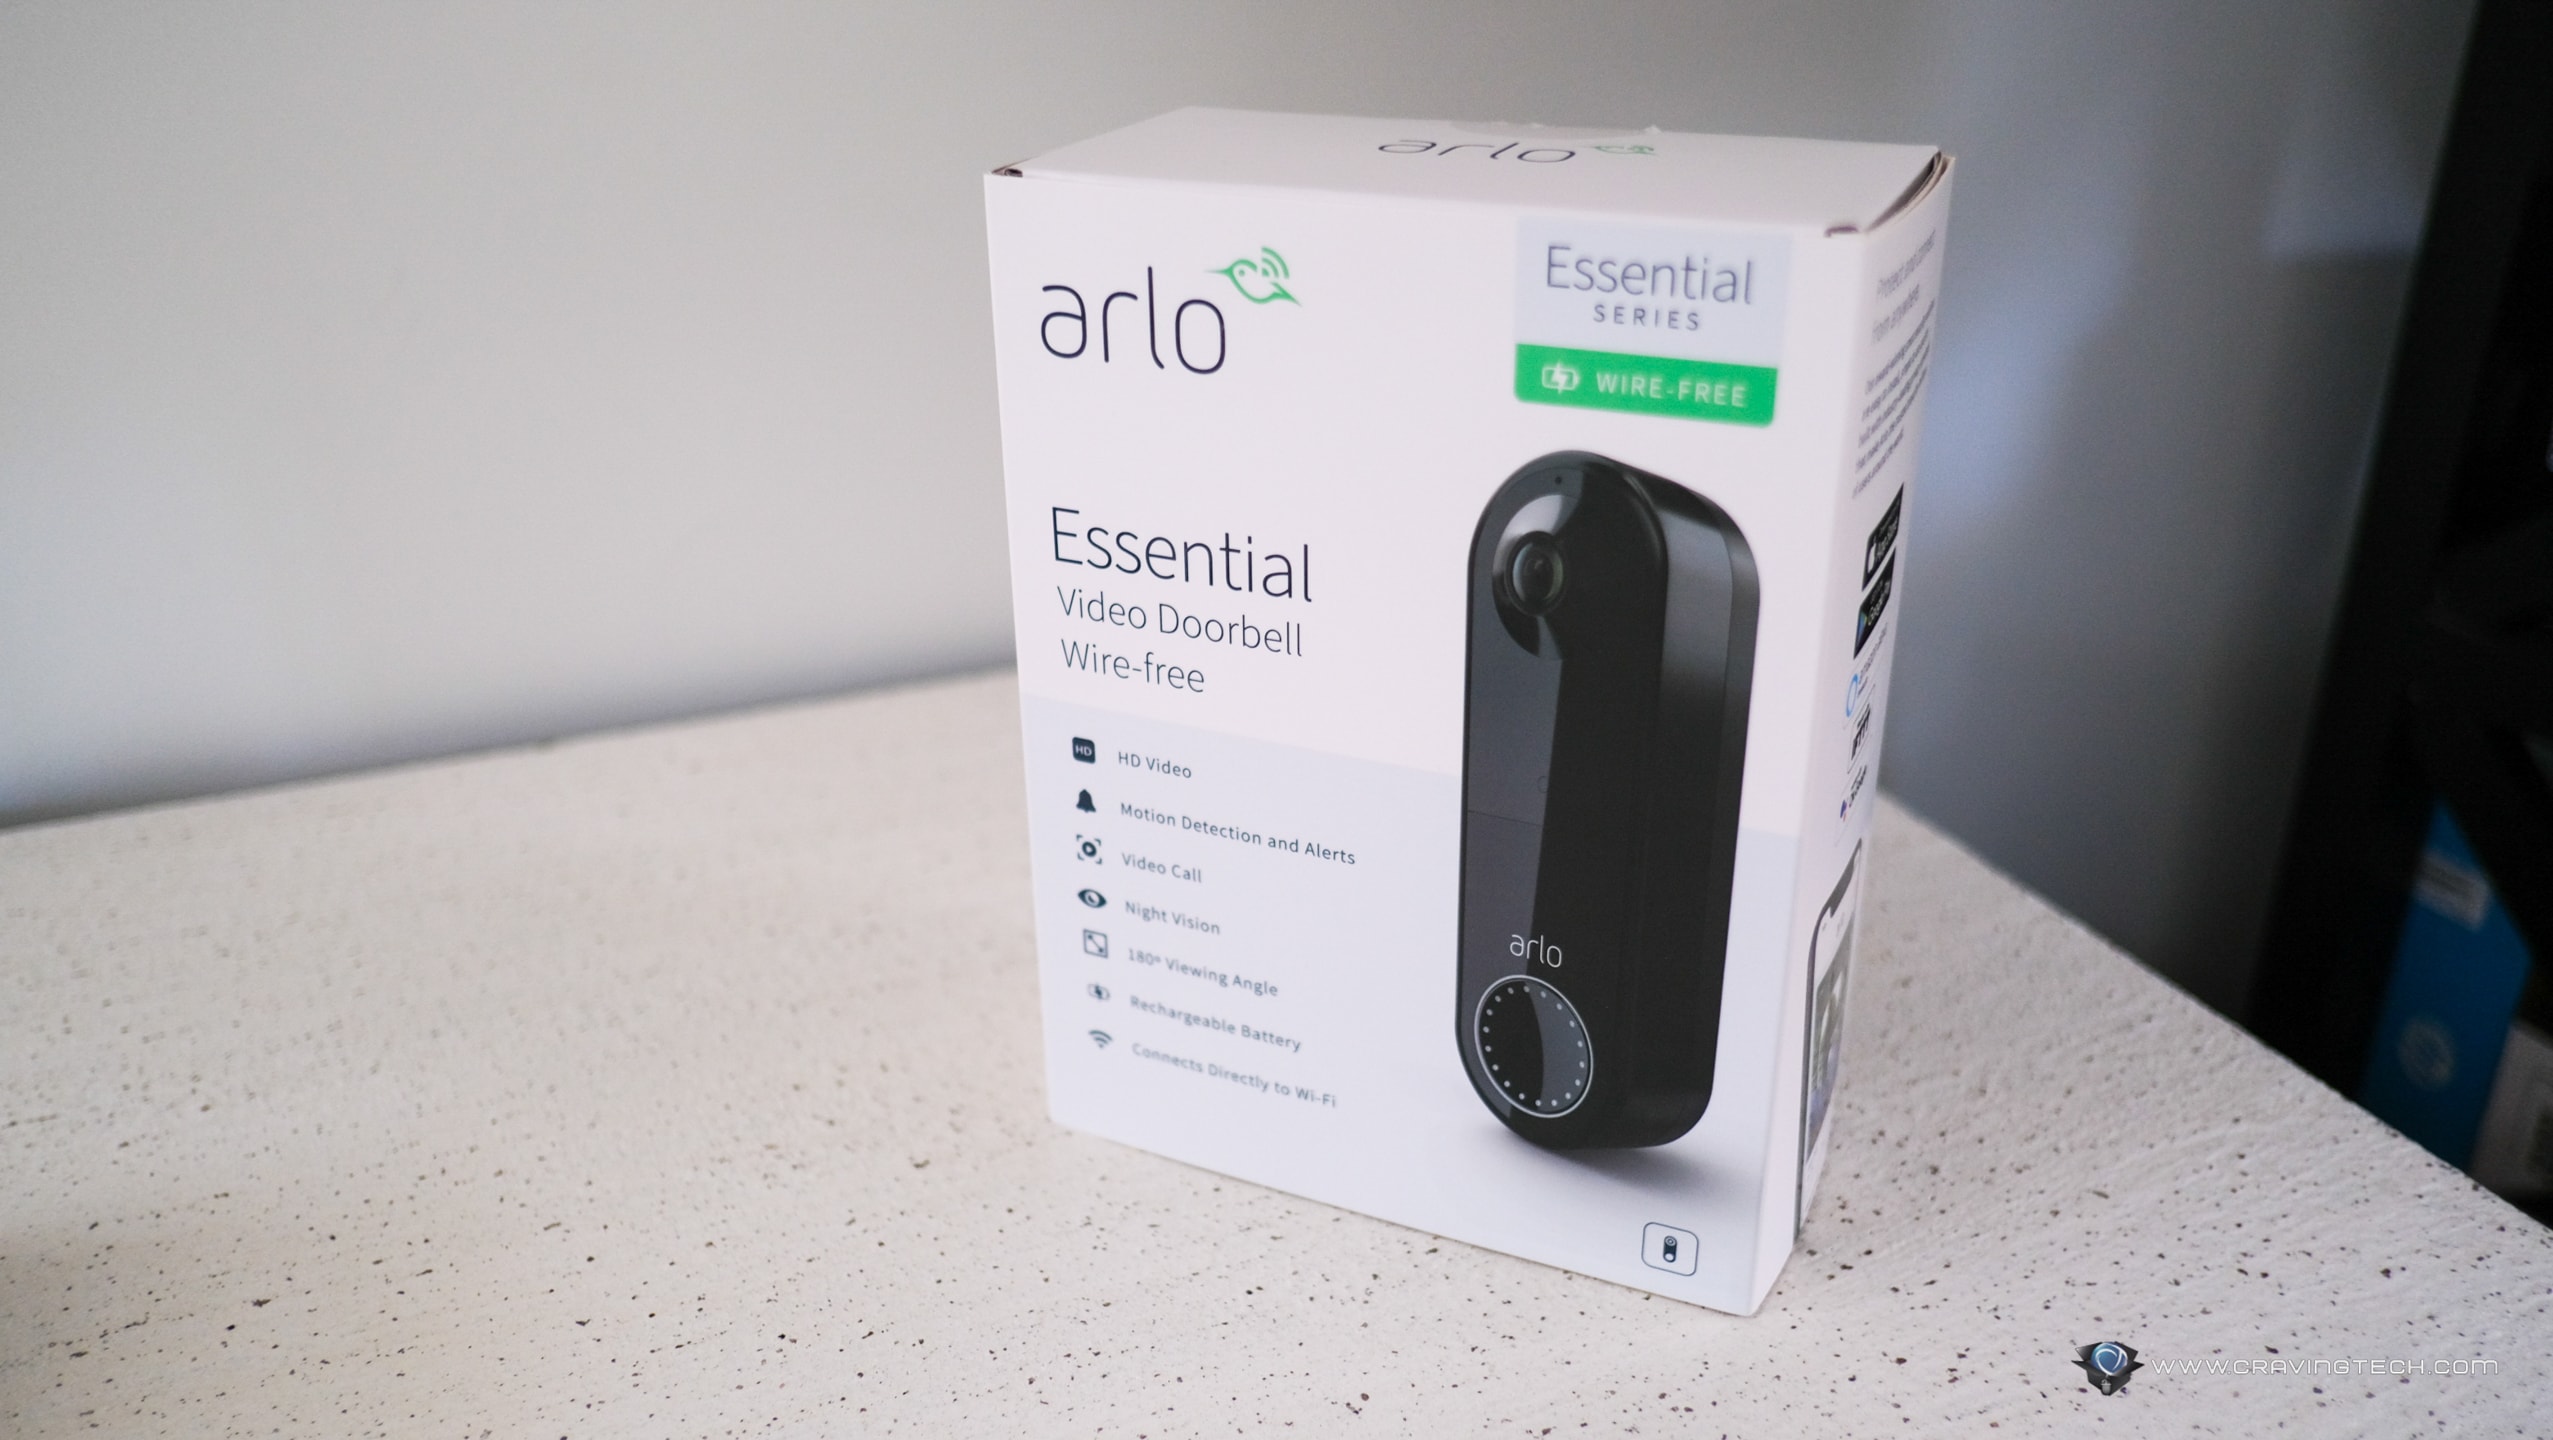 Arlo video doorbell goes wire free – Arlo Essential Video Doorbell Wire-Free